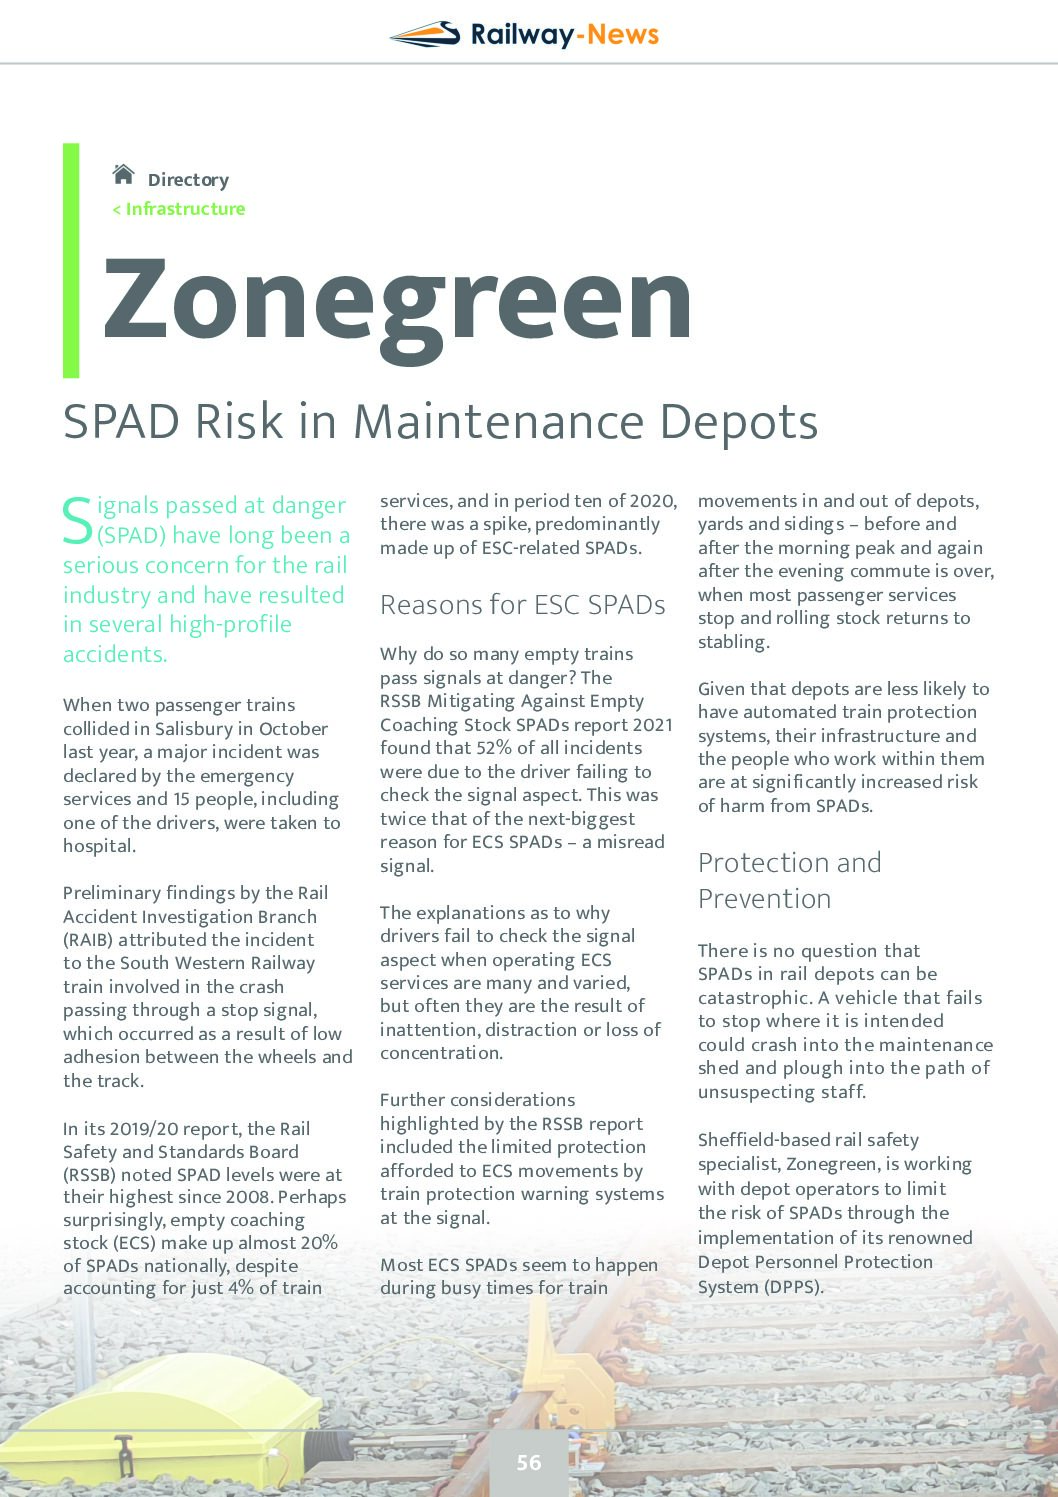 SPAD Risk in Maintenance Depots